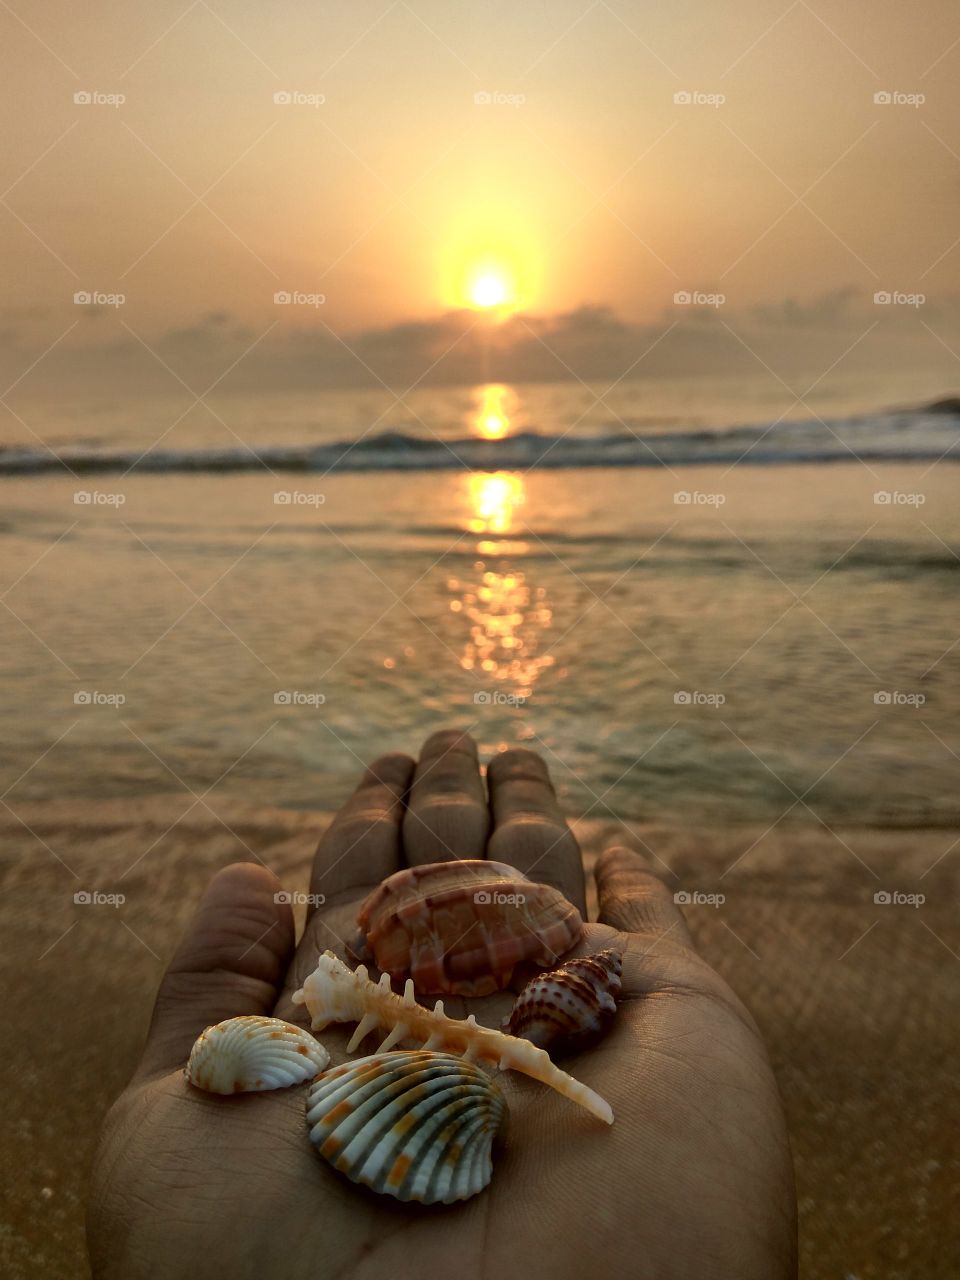 Handfull of seashells